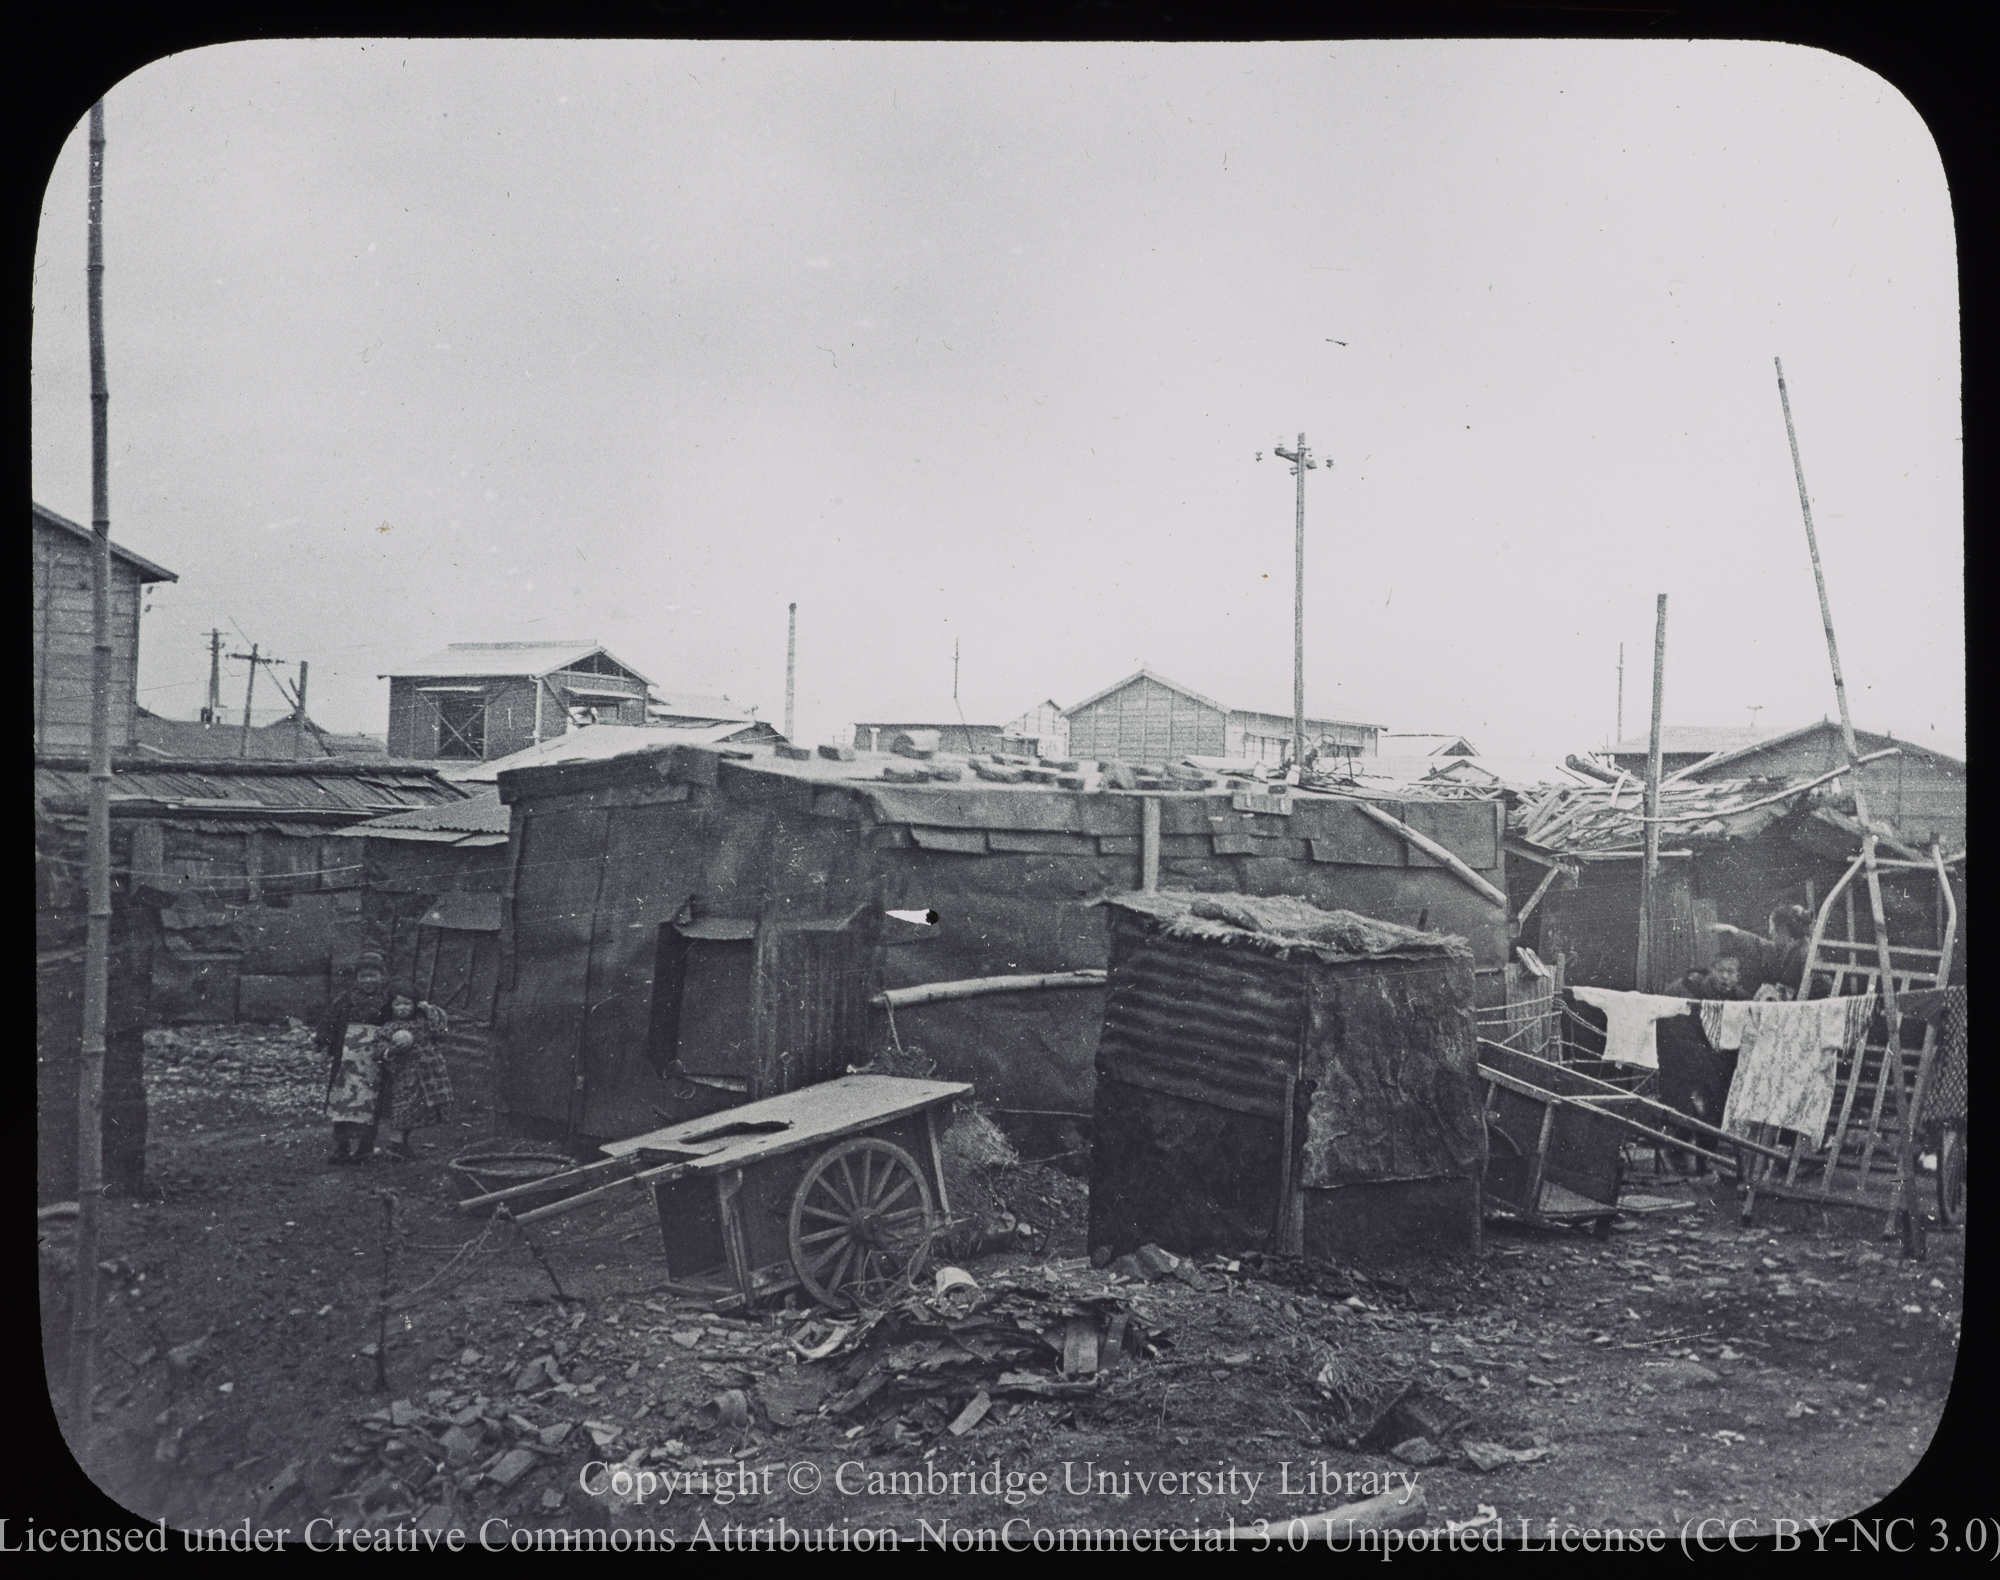 1923 earthquake and typhoon: barrack dwellings after earthquake, 1923